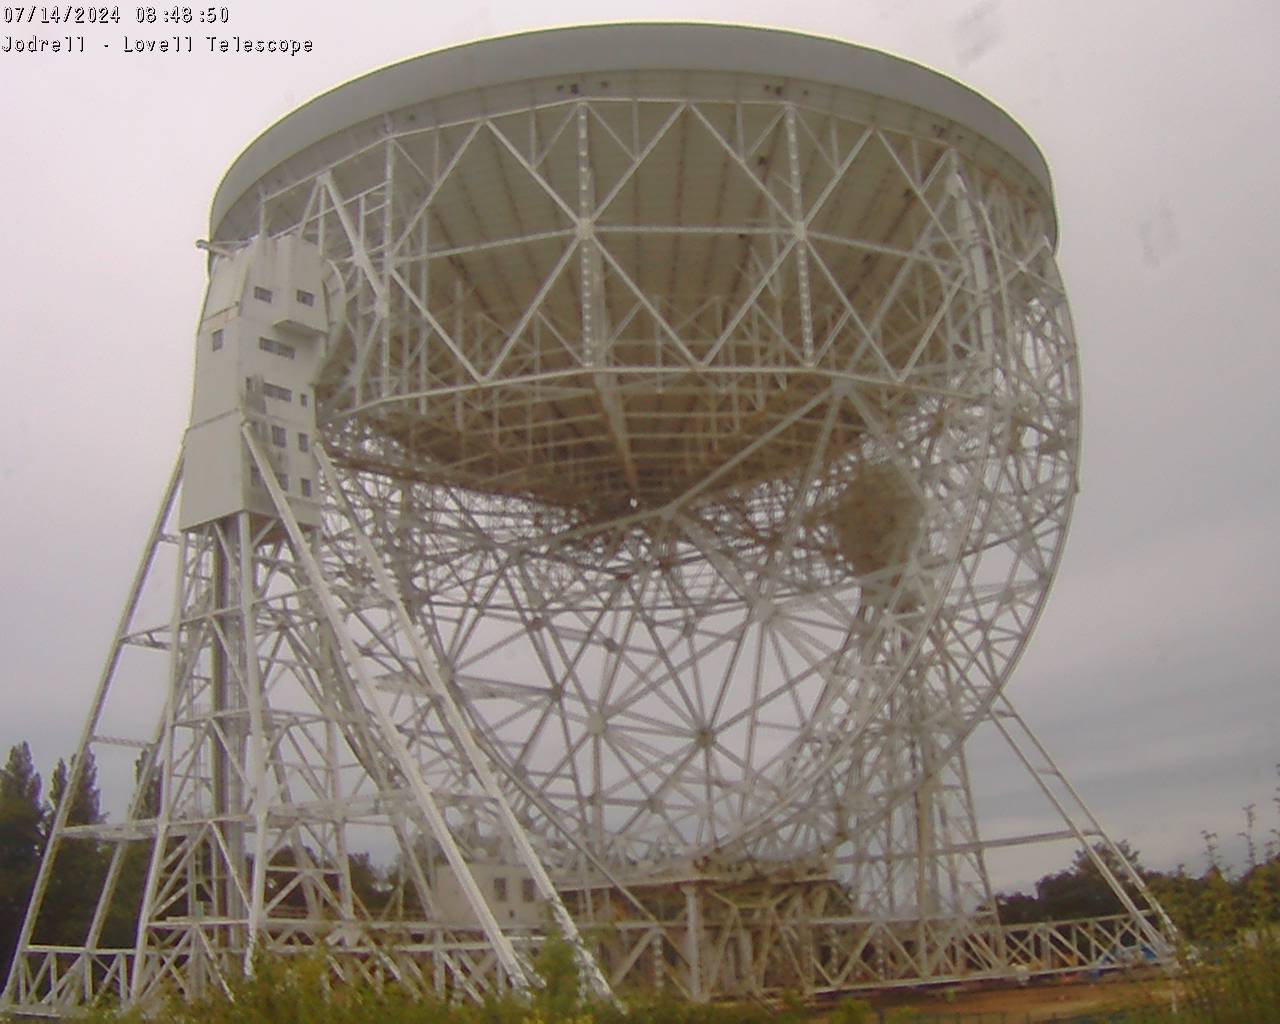 Jodrell Bank Observatory Thu. 08:49